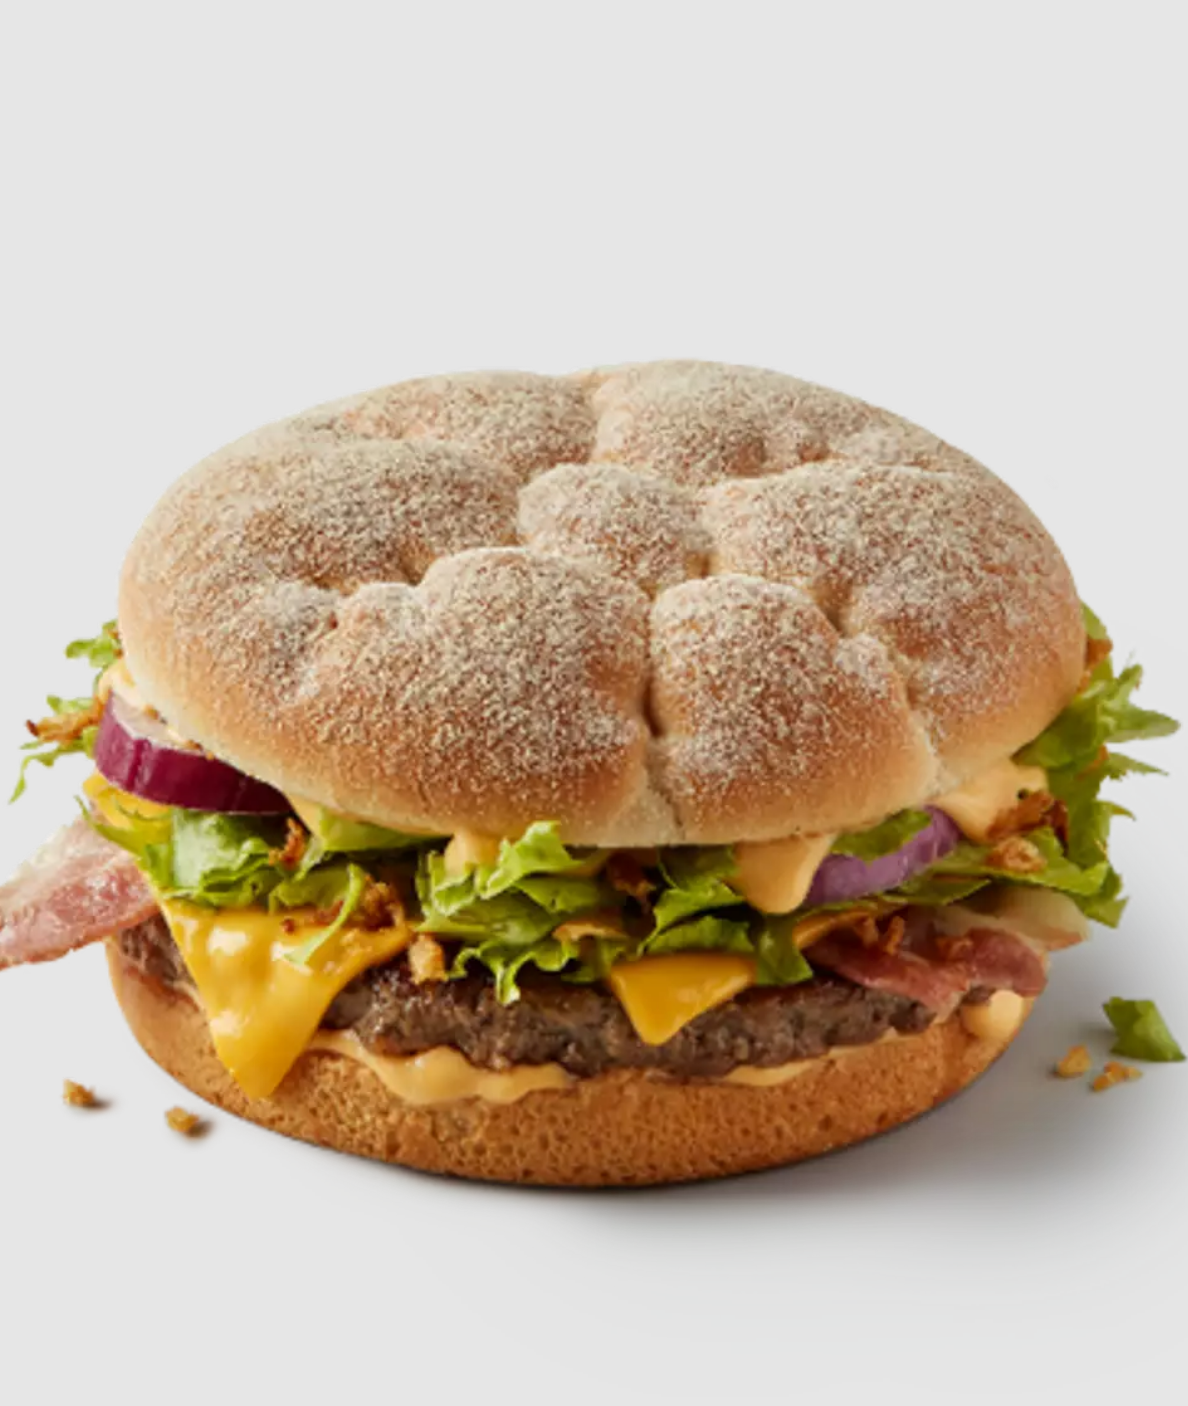 A burger from McDonald's.